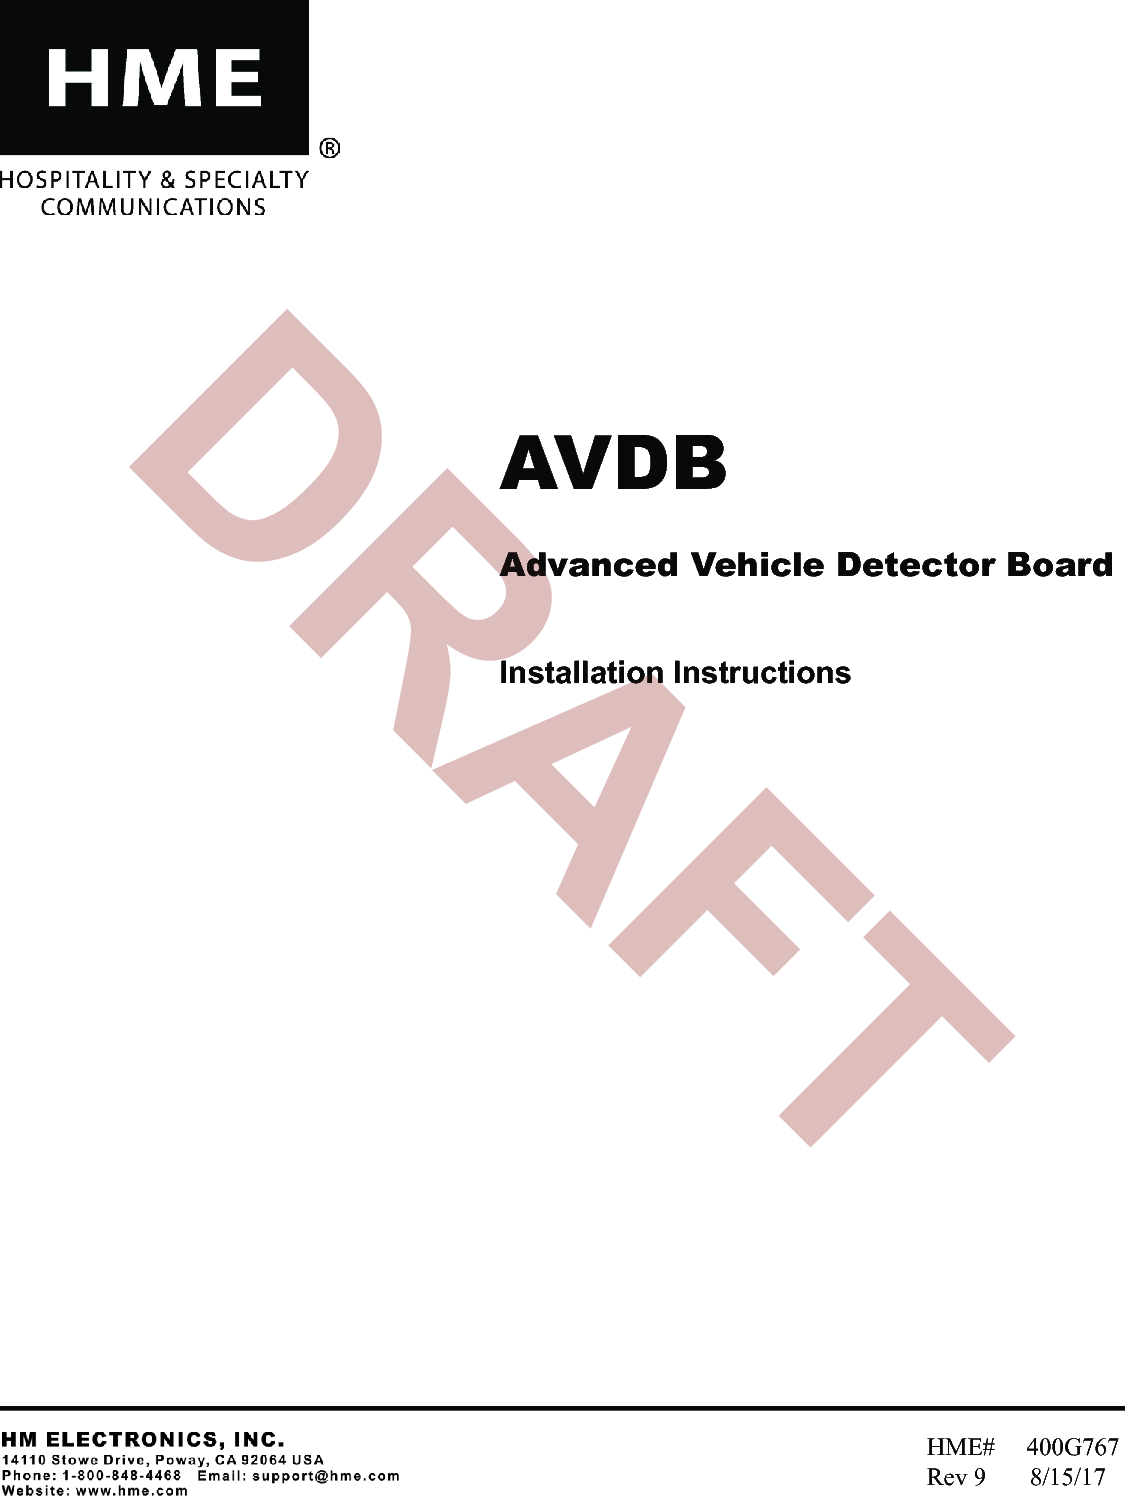 AVDBAdvanced Vehicle Detector BoardInstallation InstructionsHME#     400G767   Rev 9       8/15/17DRAFT